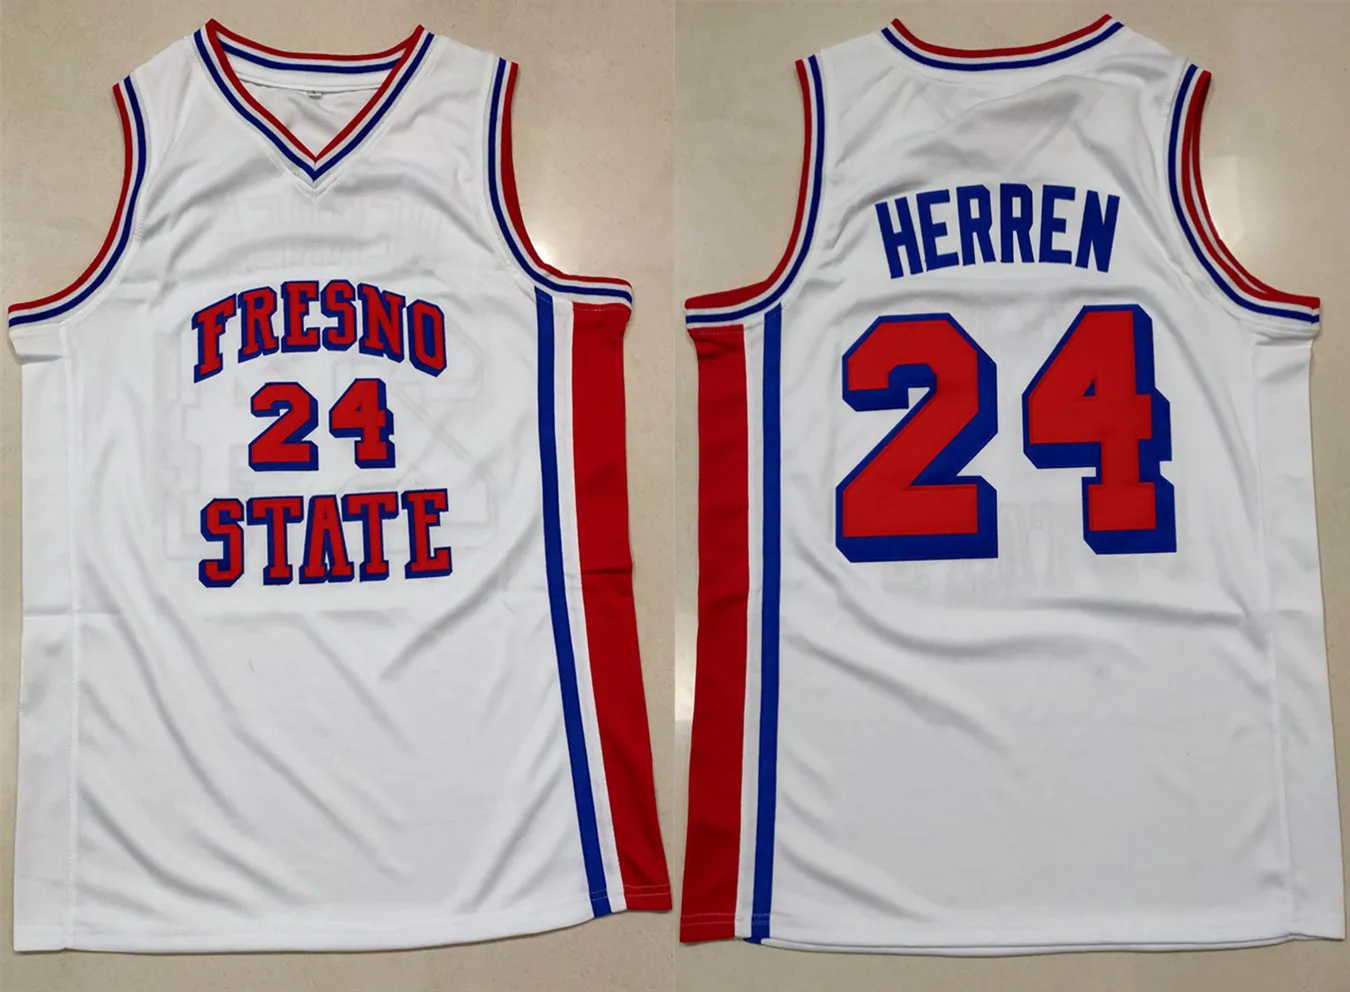 Chris Herren #24 Fresno State Bulldogs College Boston draft pick Retro Basketball Jersey Men's Stitched Custom Any Number Name Jerseys